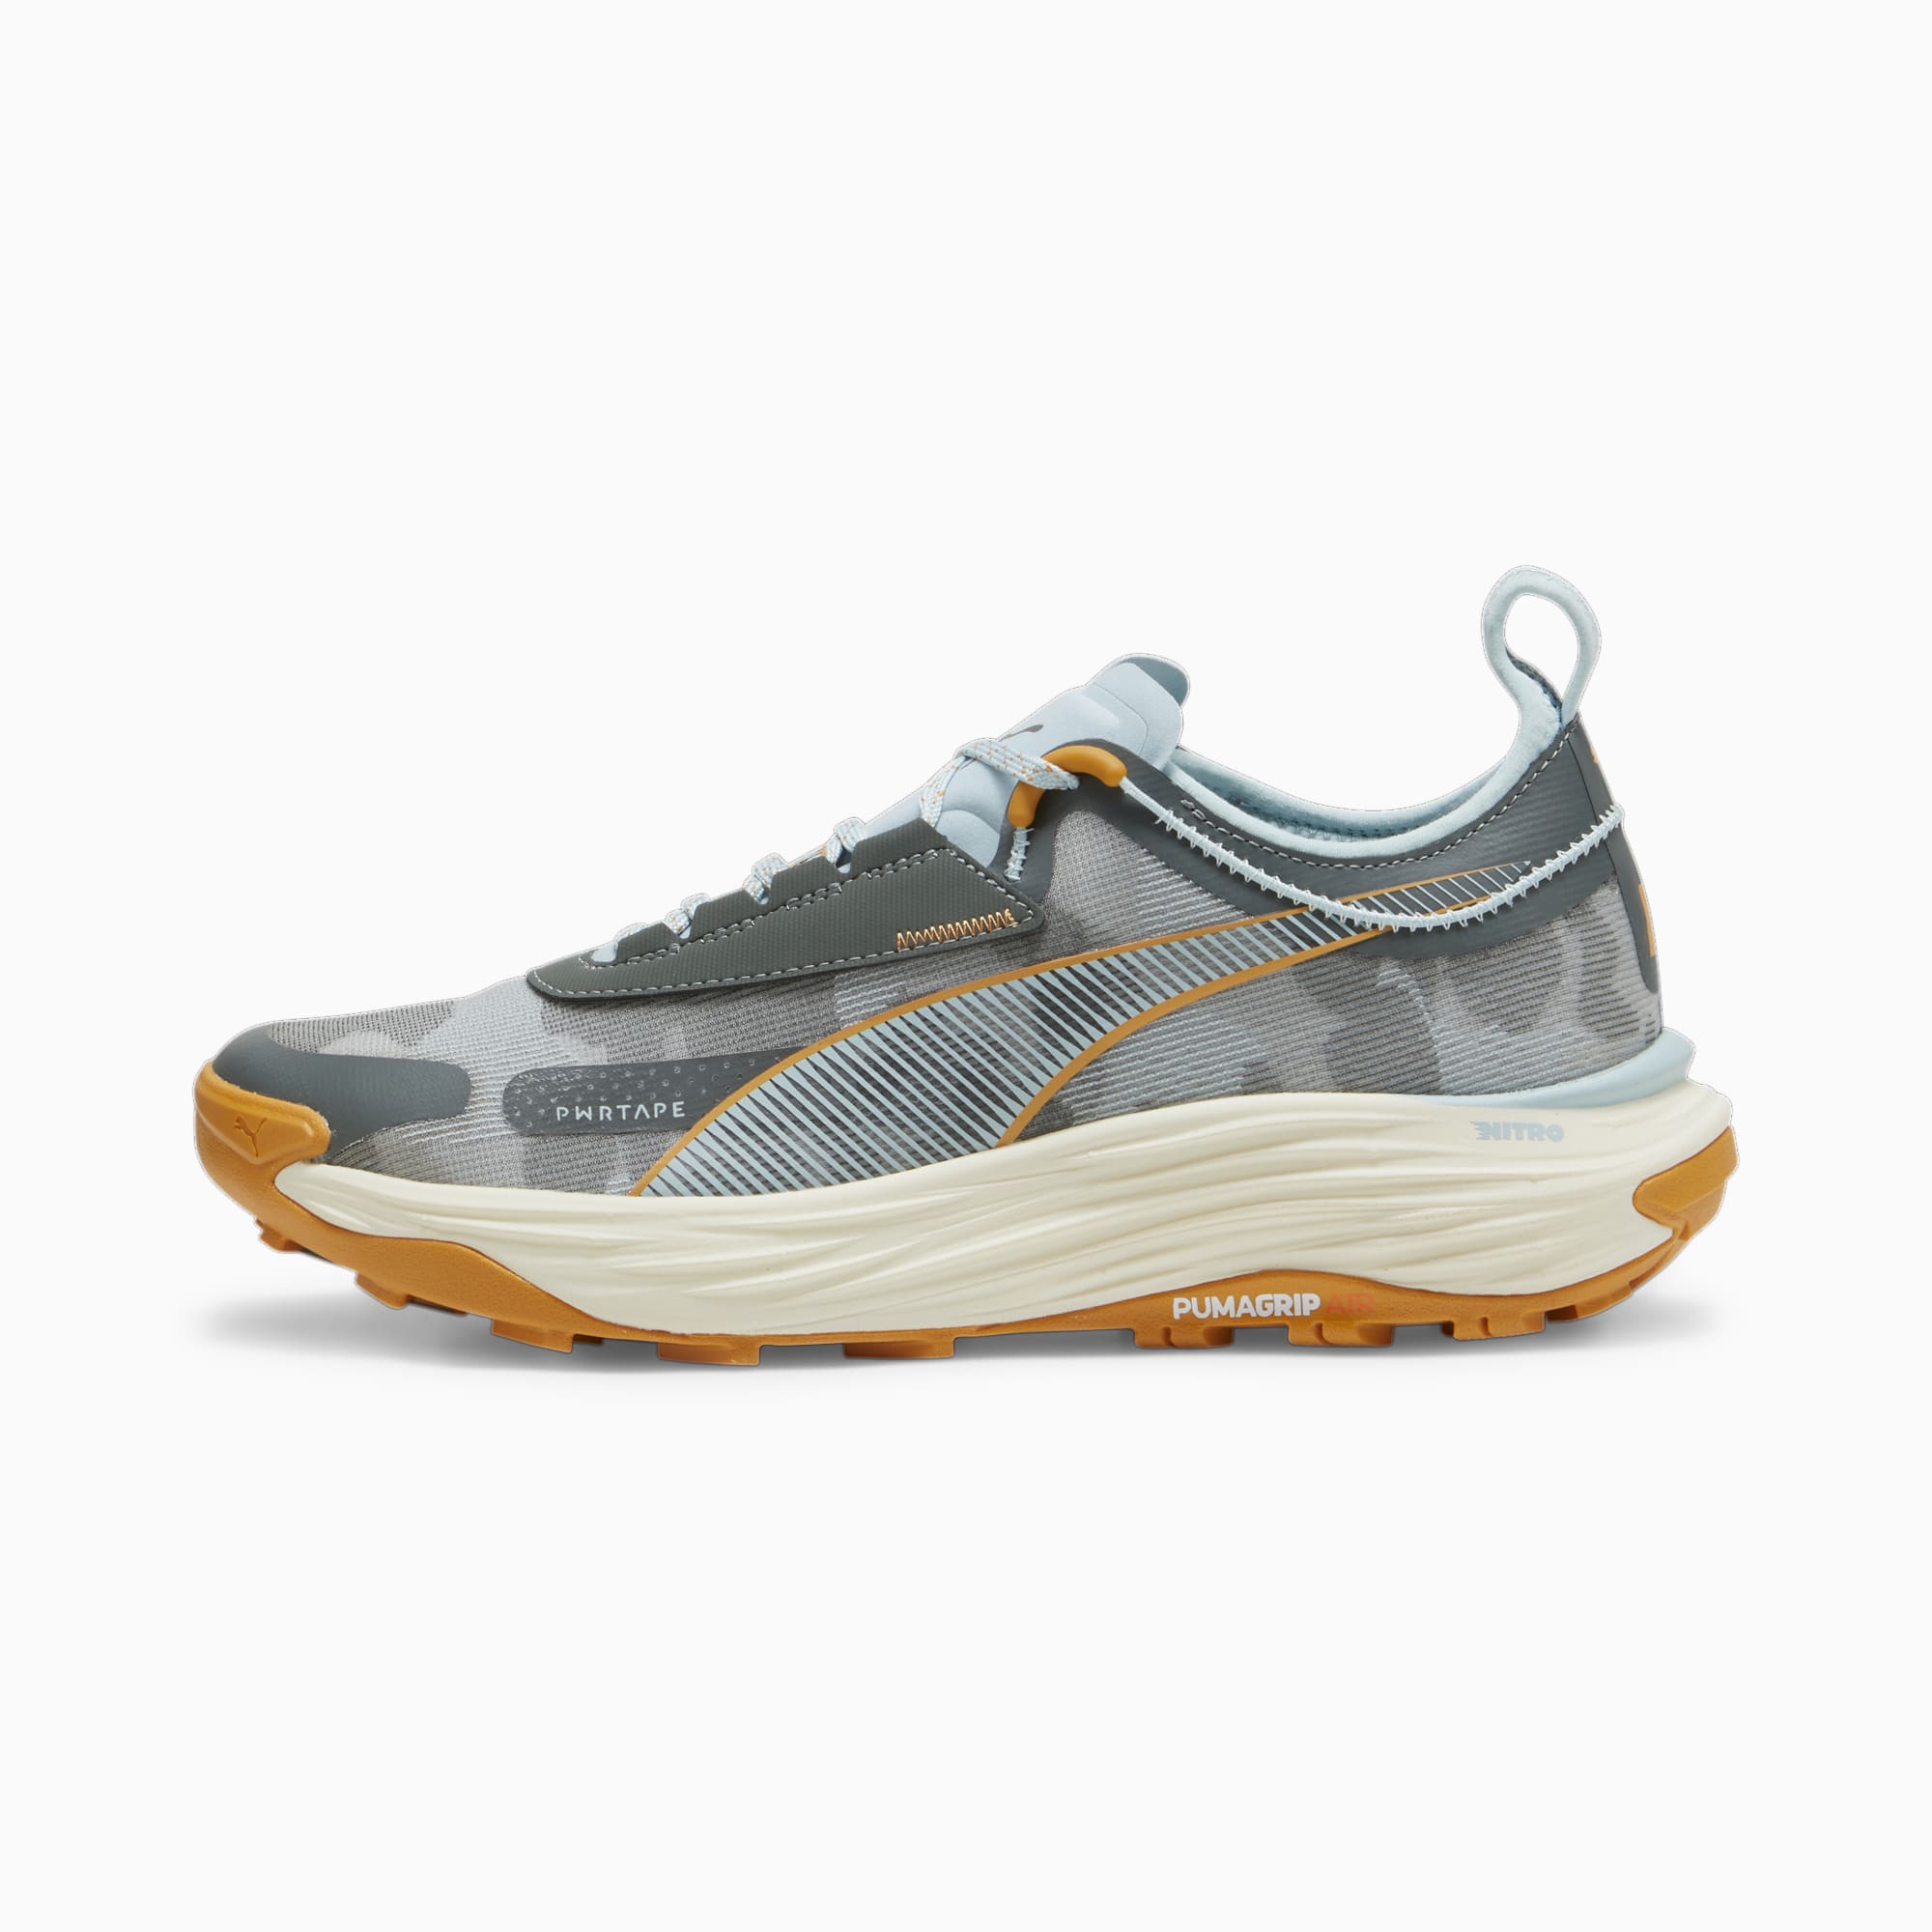 PUMA Voyage Nitroâ¢ 3 Men's Trail Running Shoes